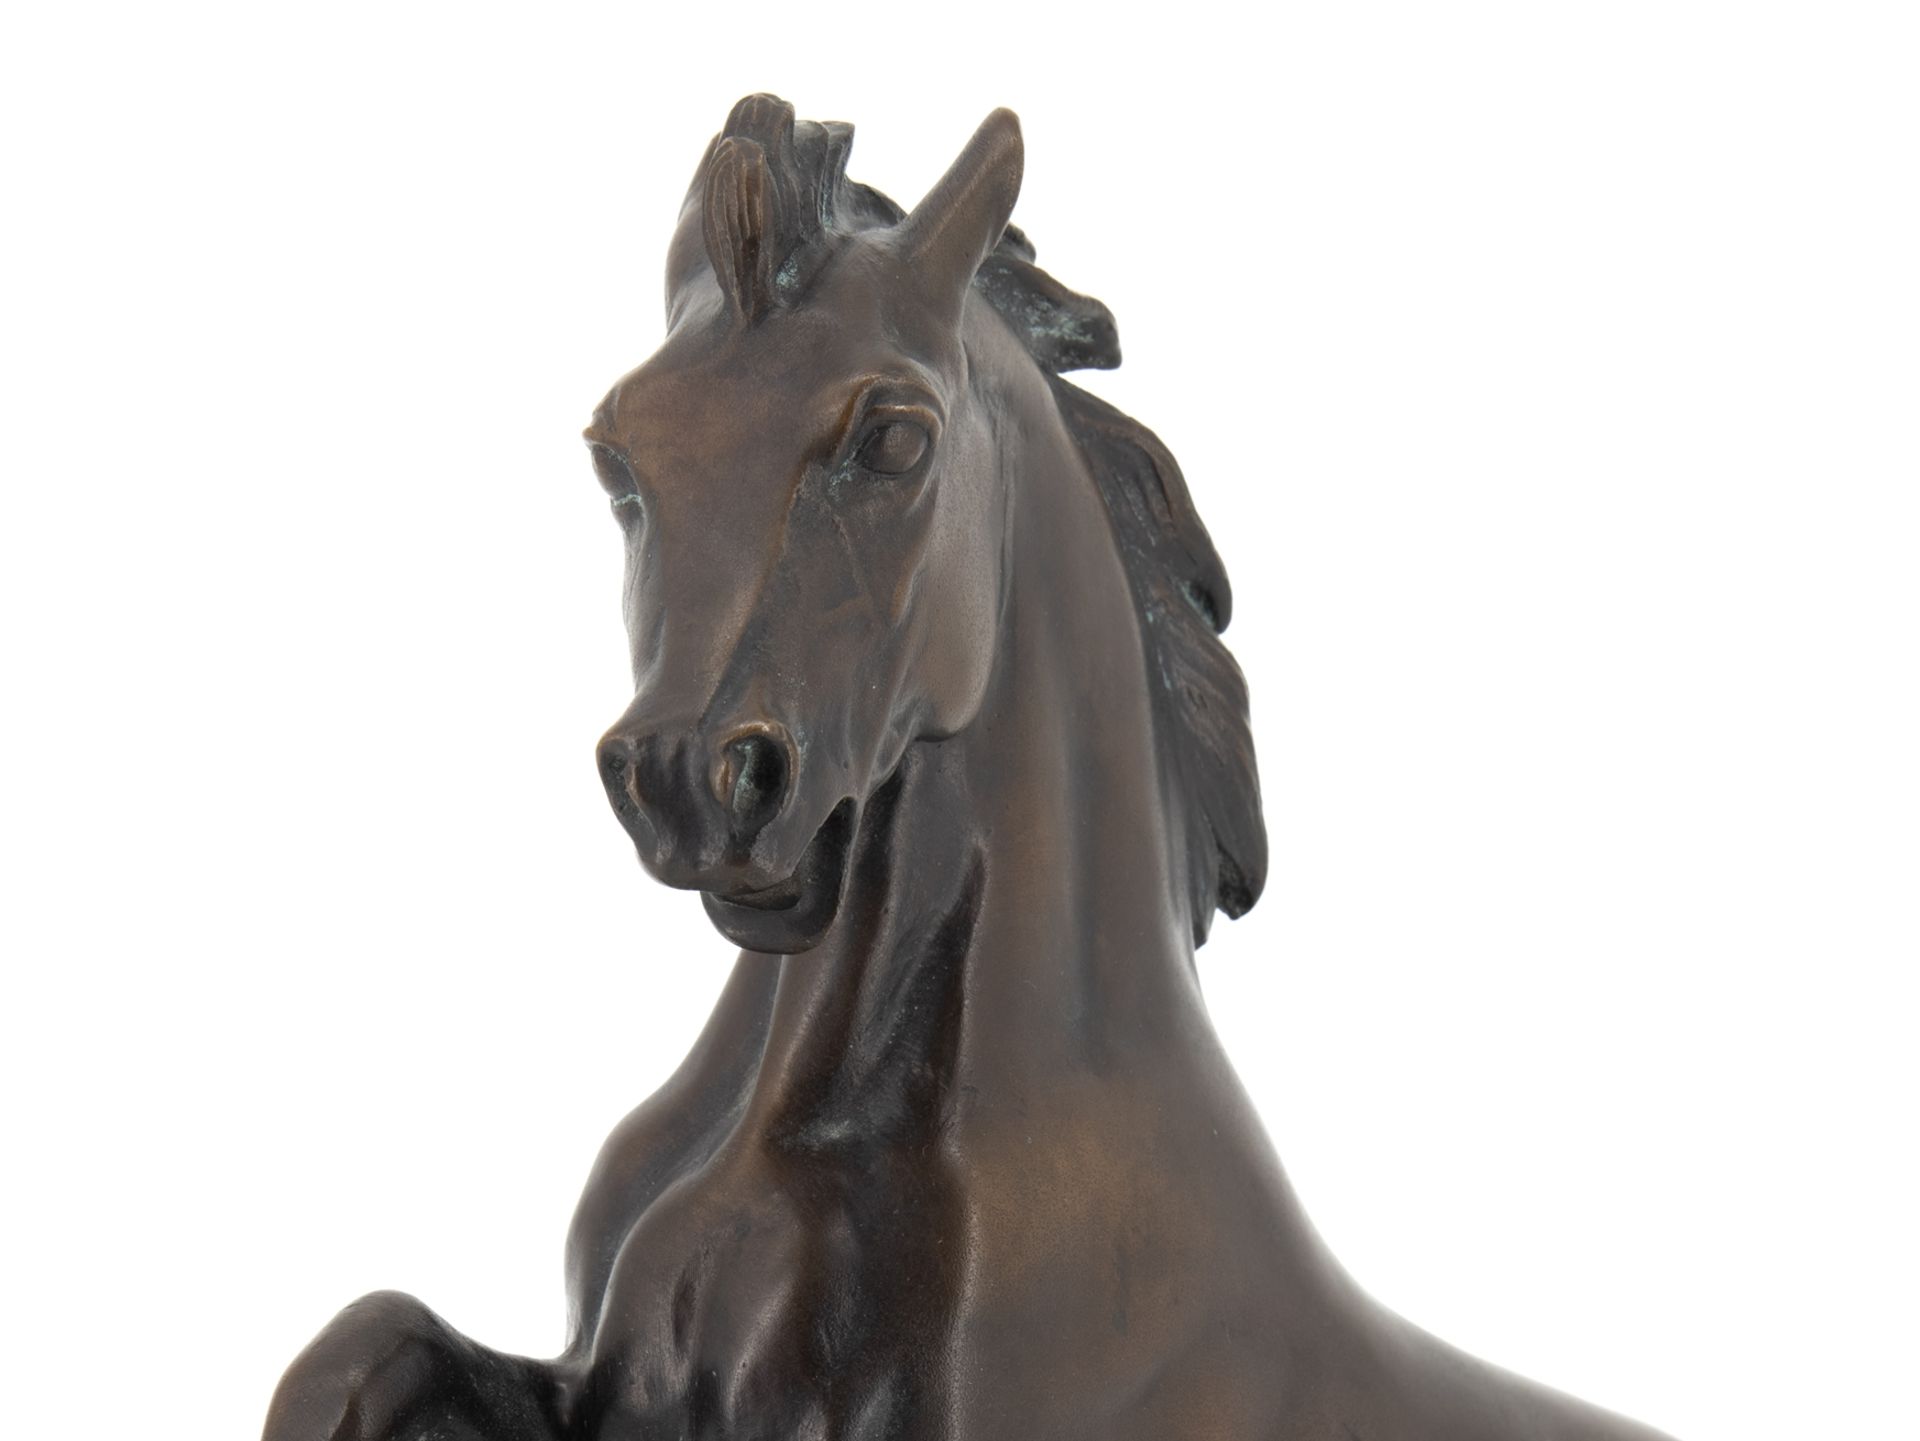 Diller Helmut (1911 - 1984), Bronze sculpture "Steigendes Pferd" (Rising Horse) - Image 5 of 9